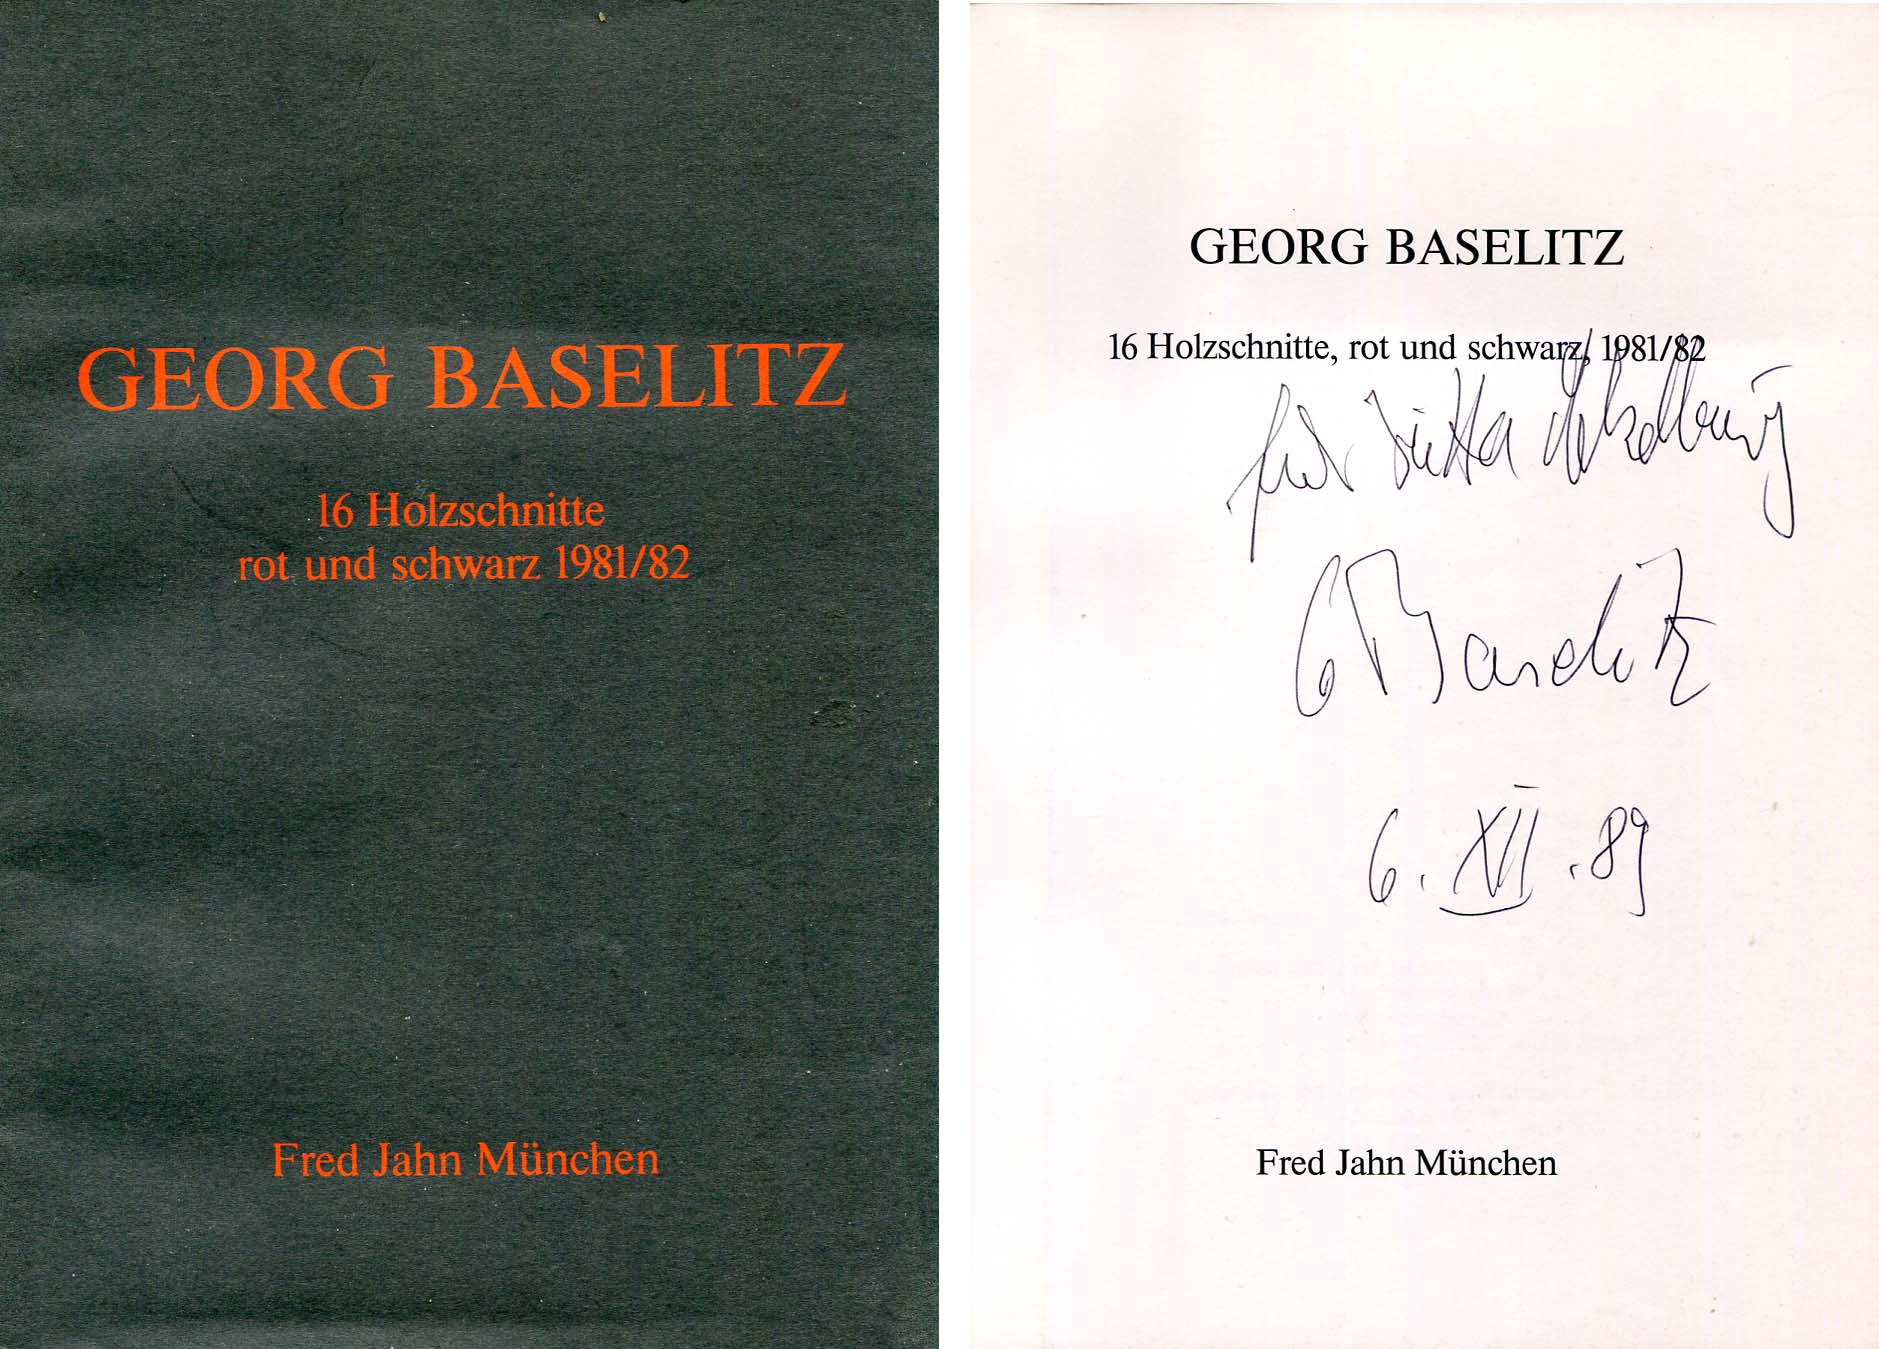 Georg Baselitz Autograph Autogramm | ID 7069682270357